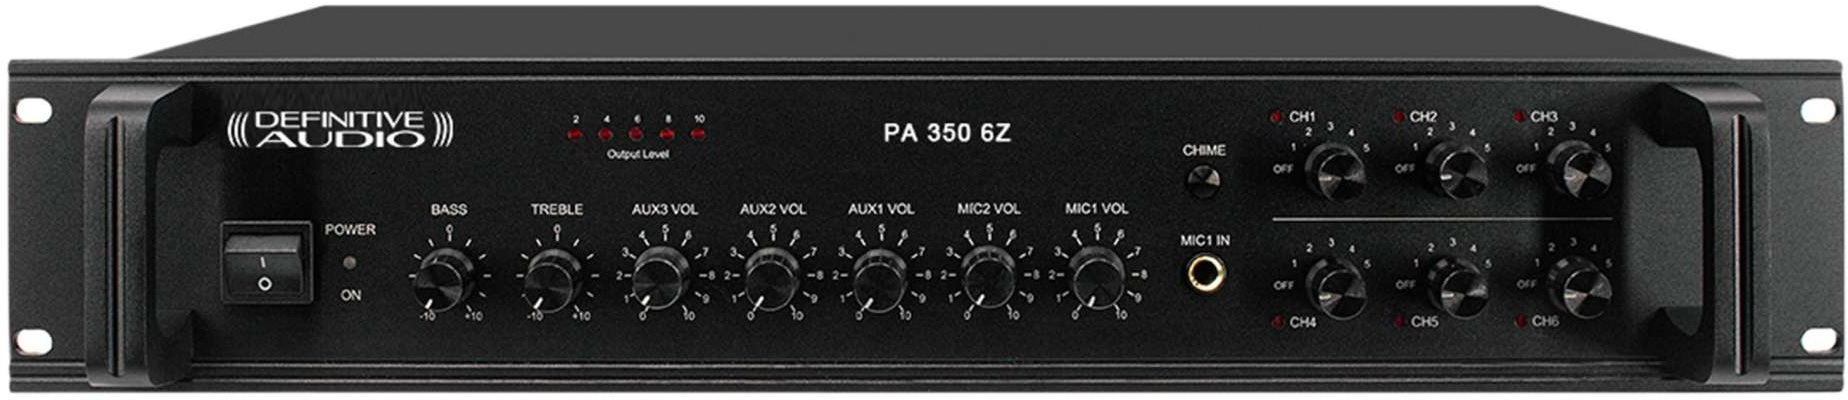 Definitive Audio Pa 350 6z - Etapa final de potencia de varios canales - Main picture